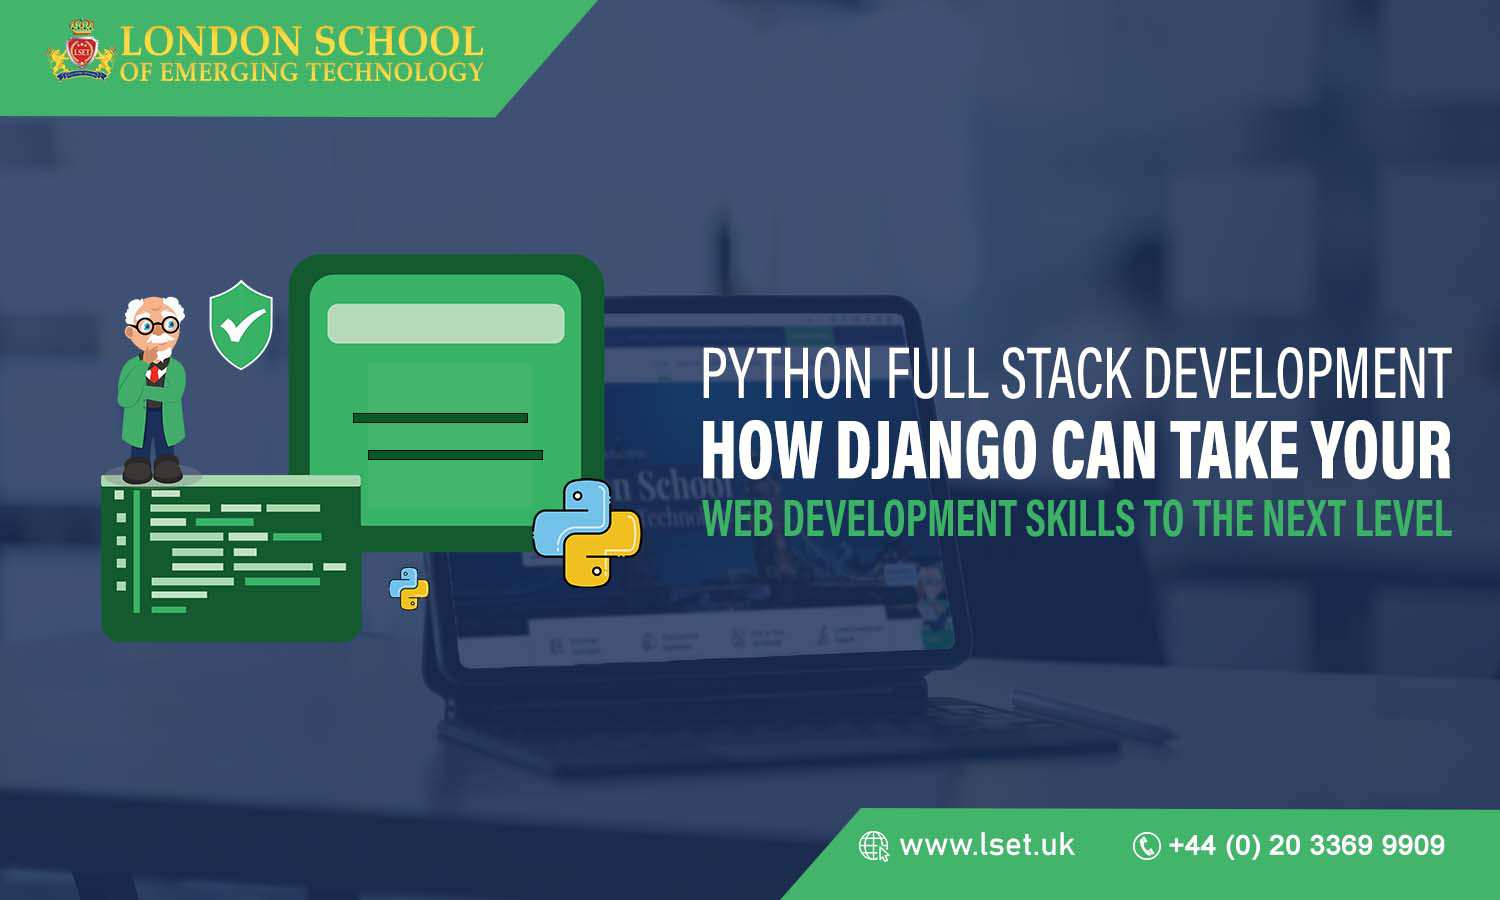 Python Full Stack Development How Django Can Take Your Web Development Skills to the Next Level